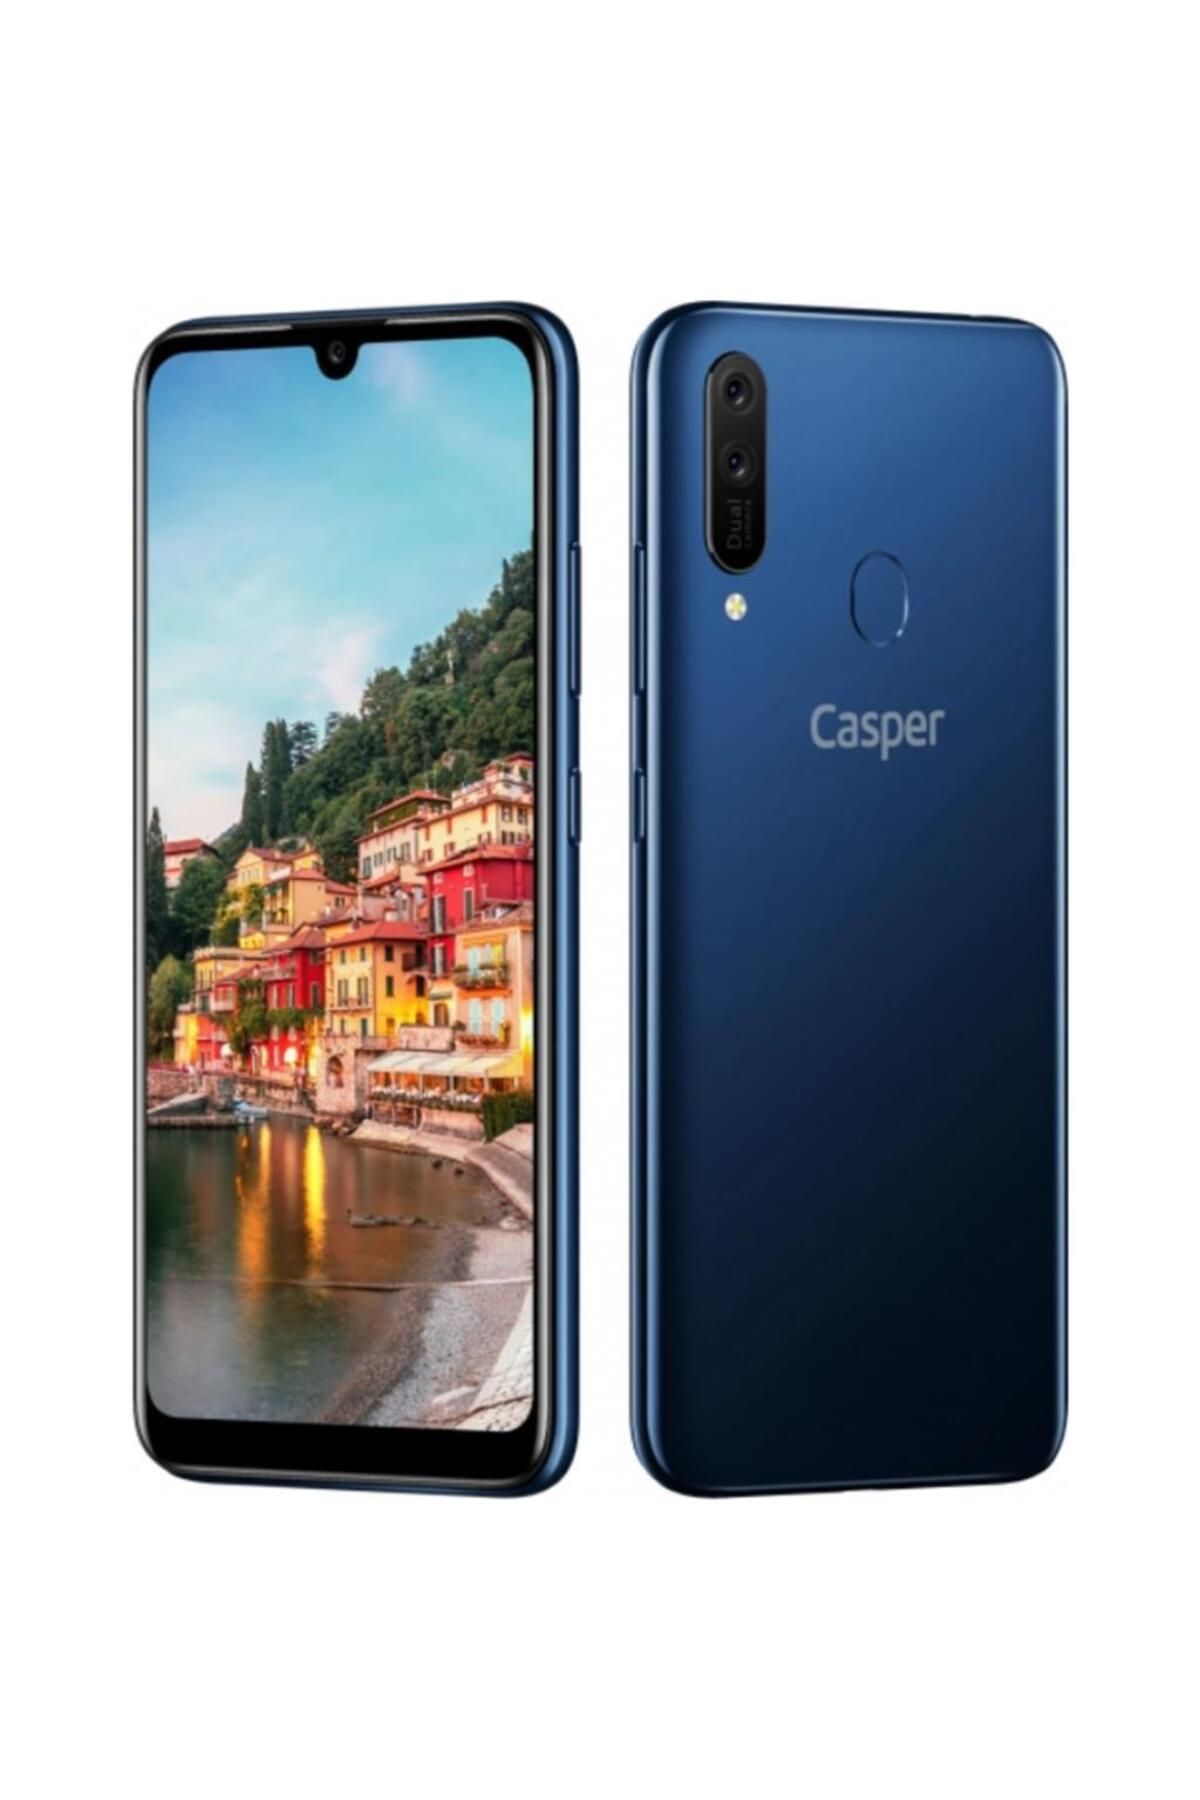 Casper Yenilenmiş Casper Via E4 Duos 32 GB Mavi Cep Telefonu A Kalite